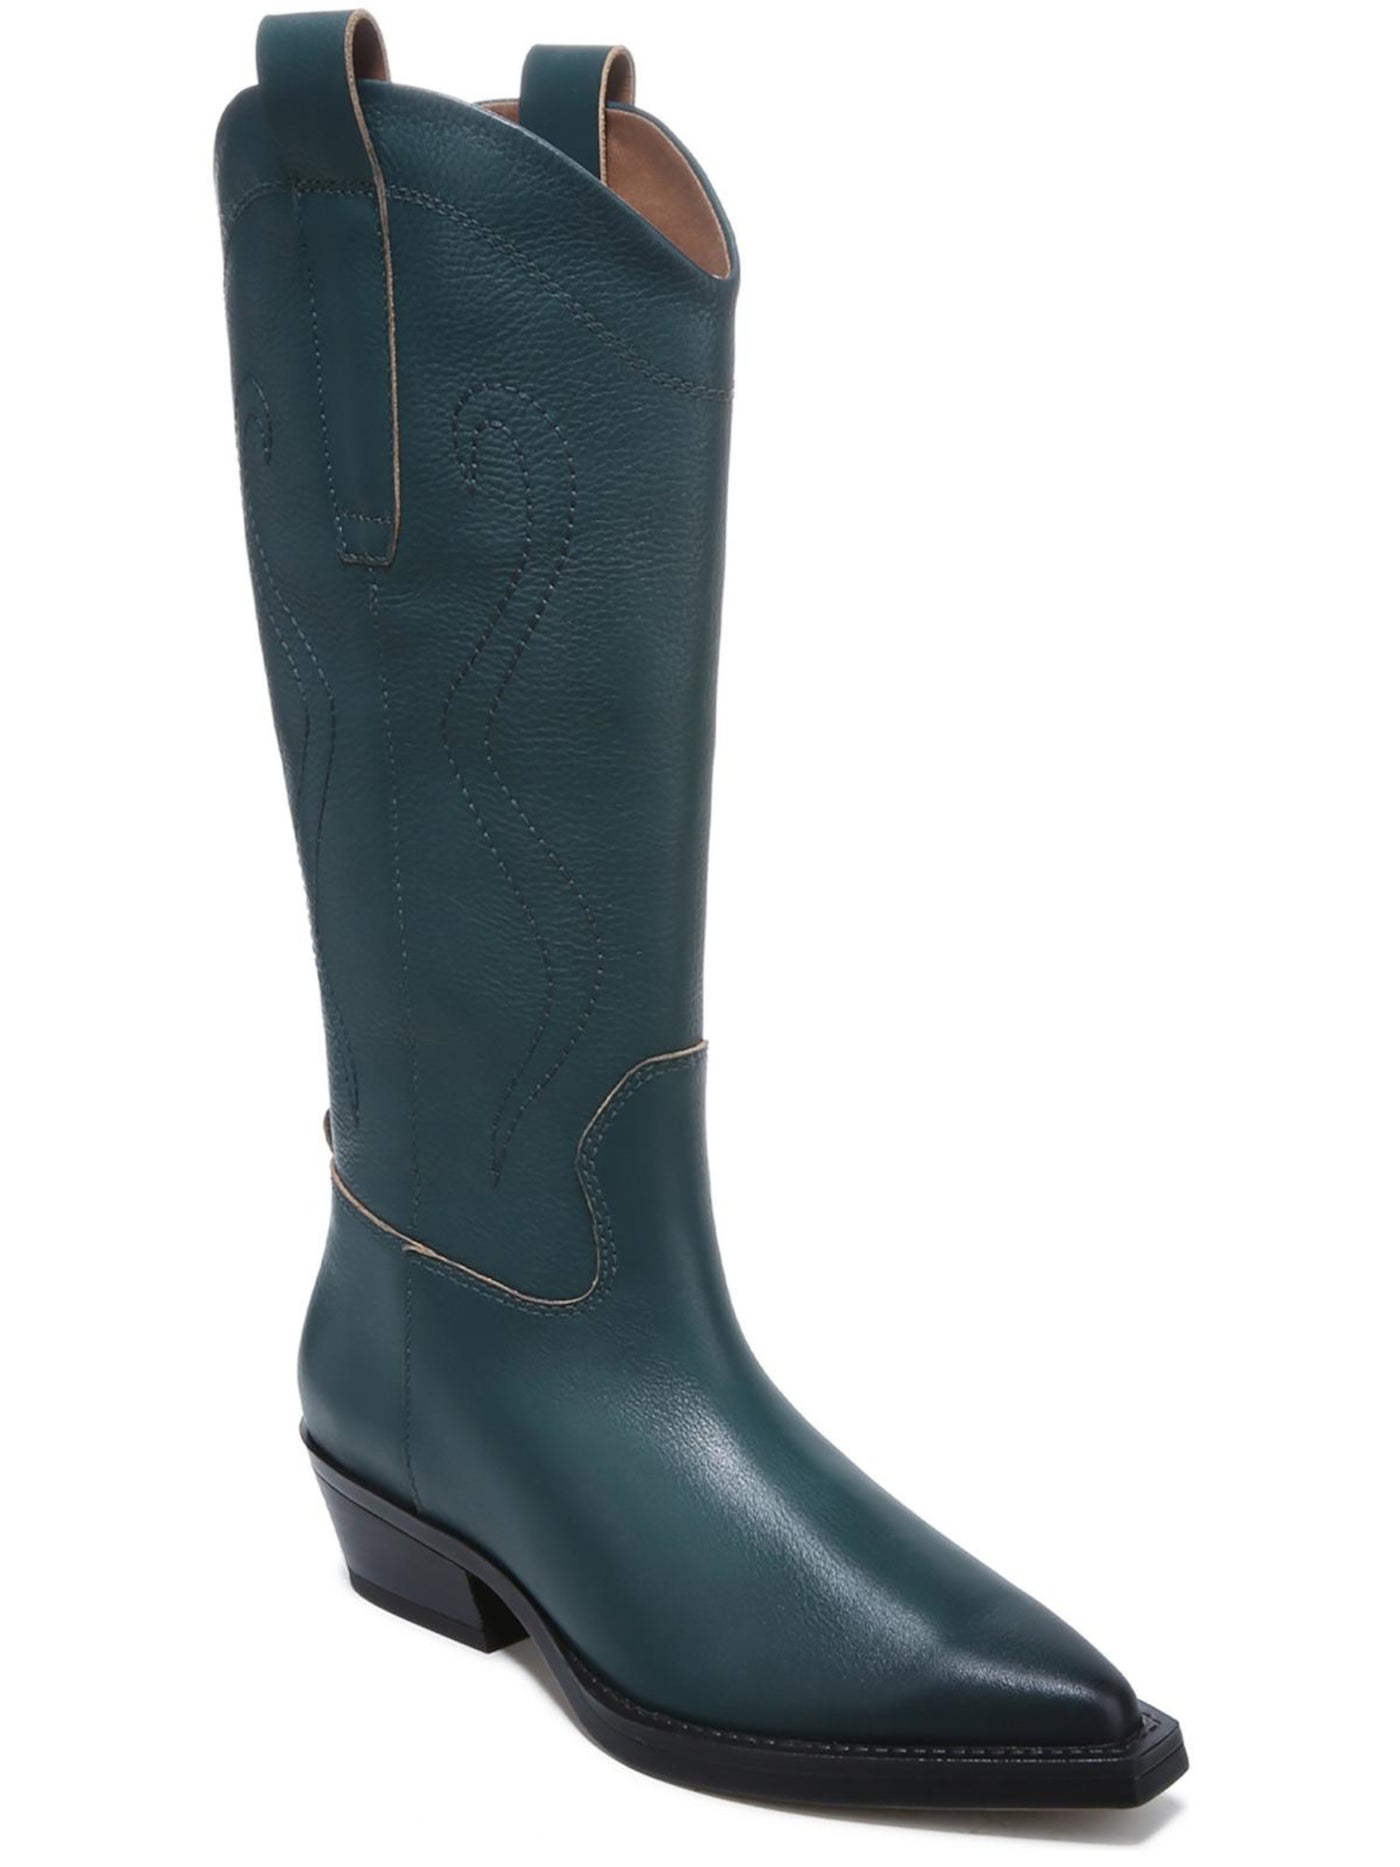 FRANCO SARTO Womens Teal Zipper Accent Liandra Pointed Toe Block Heel Leather Cowboy Boots 5 M